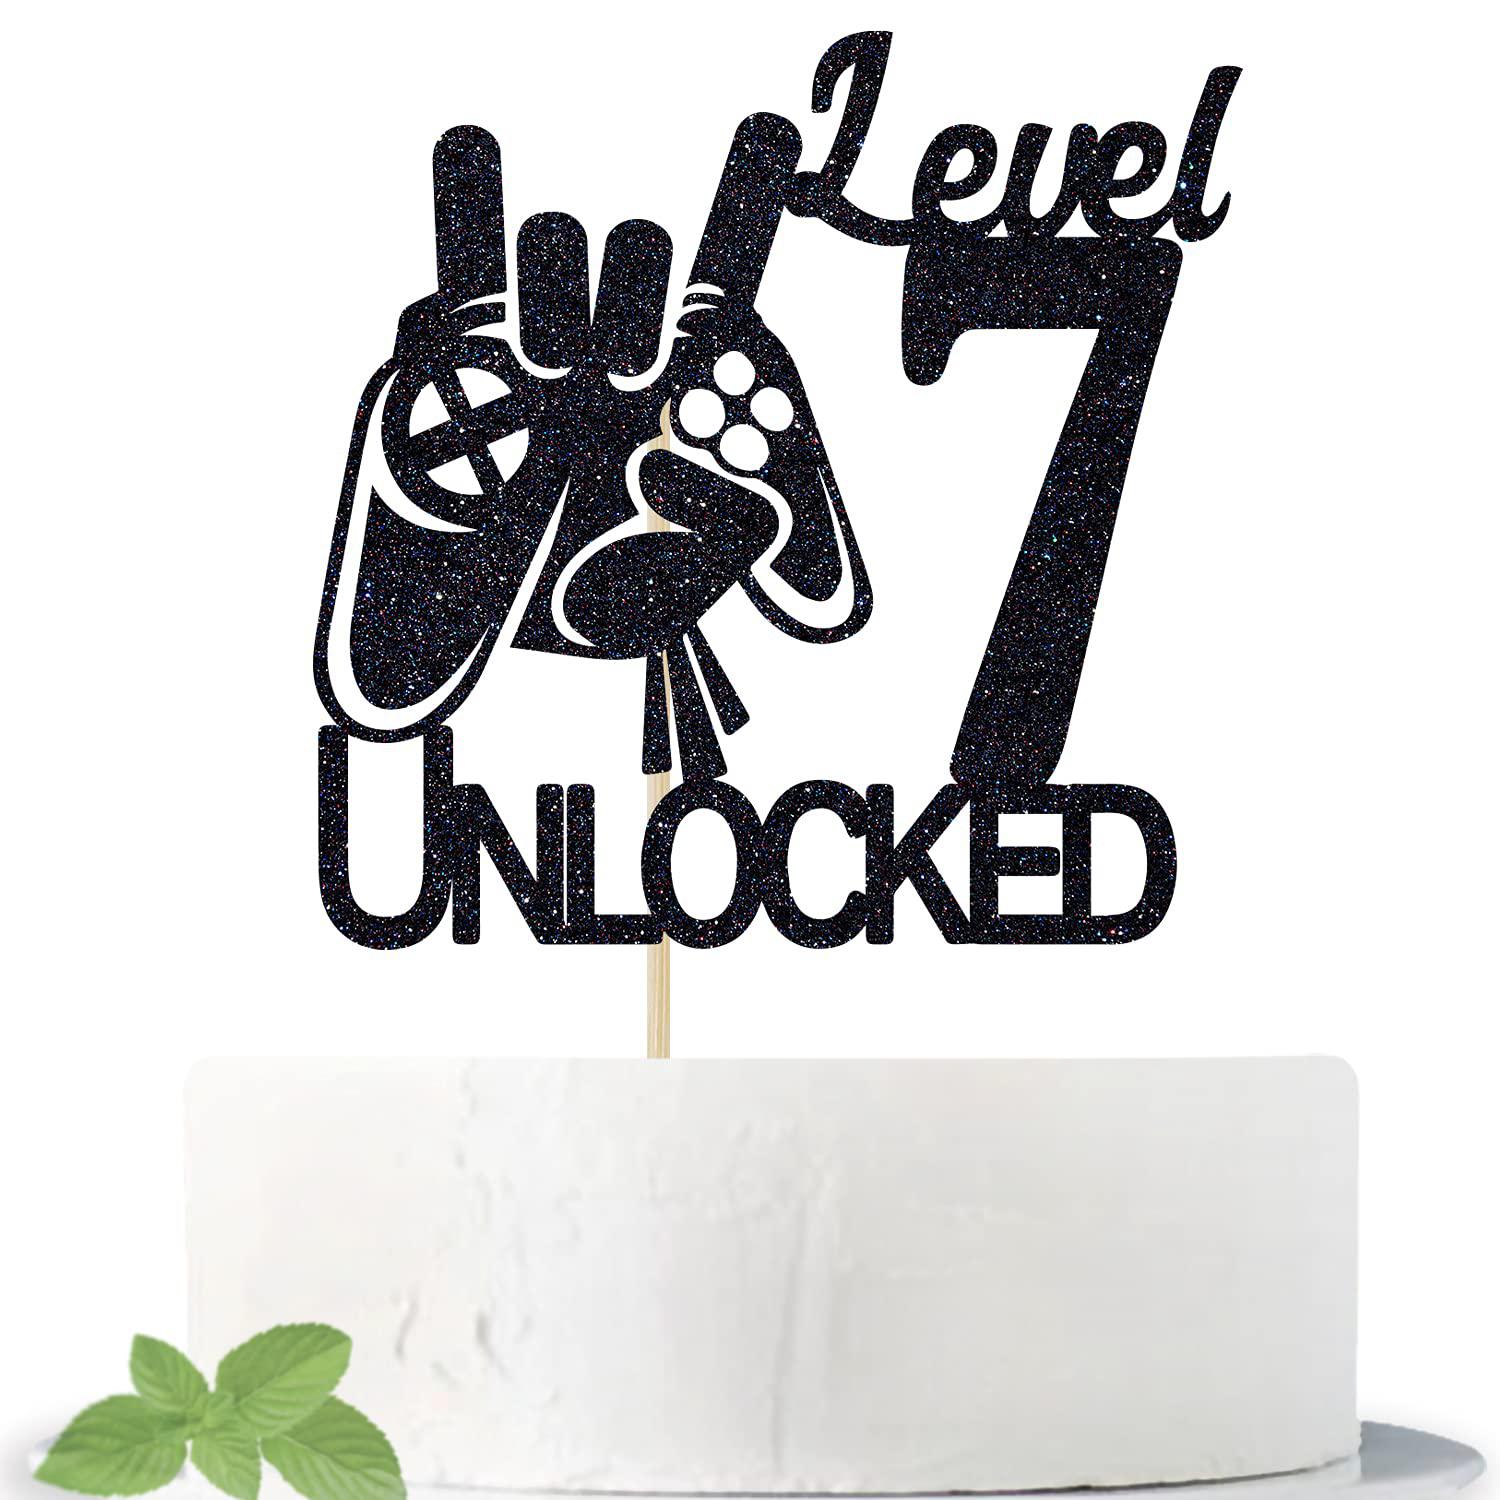 cos mos video game level 7 unlocked birthday cake topper black glitter boys 7th birthday cake decorations level up winner par